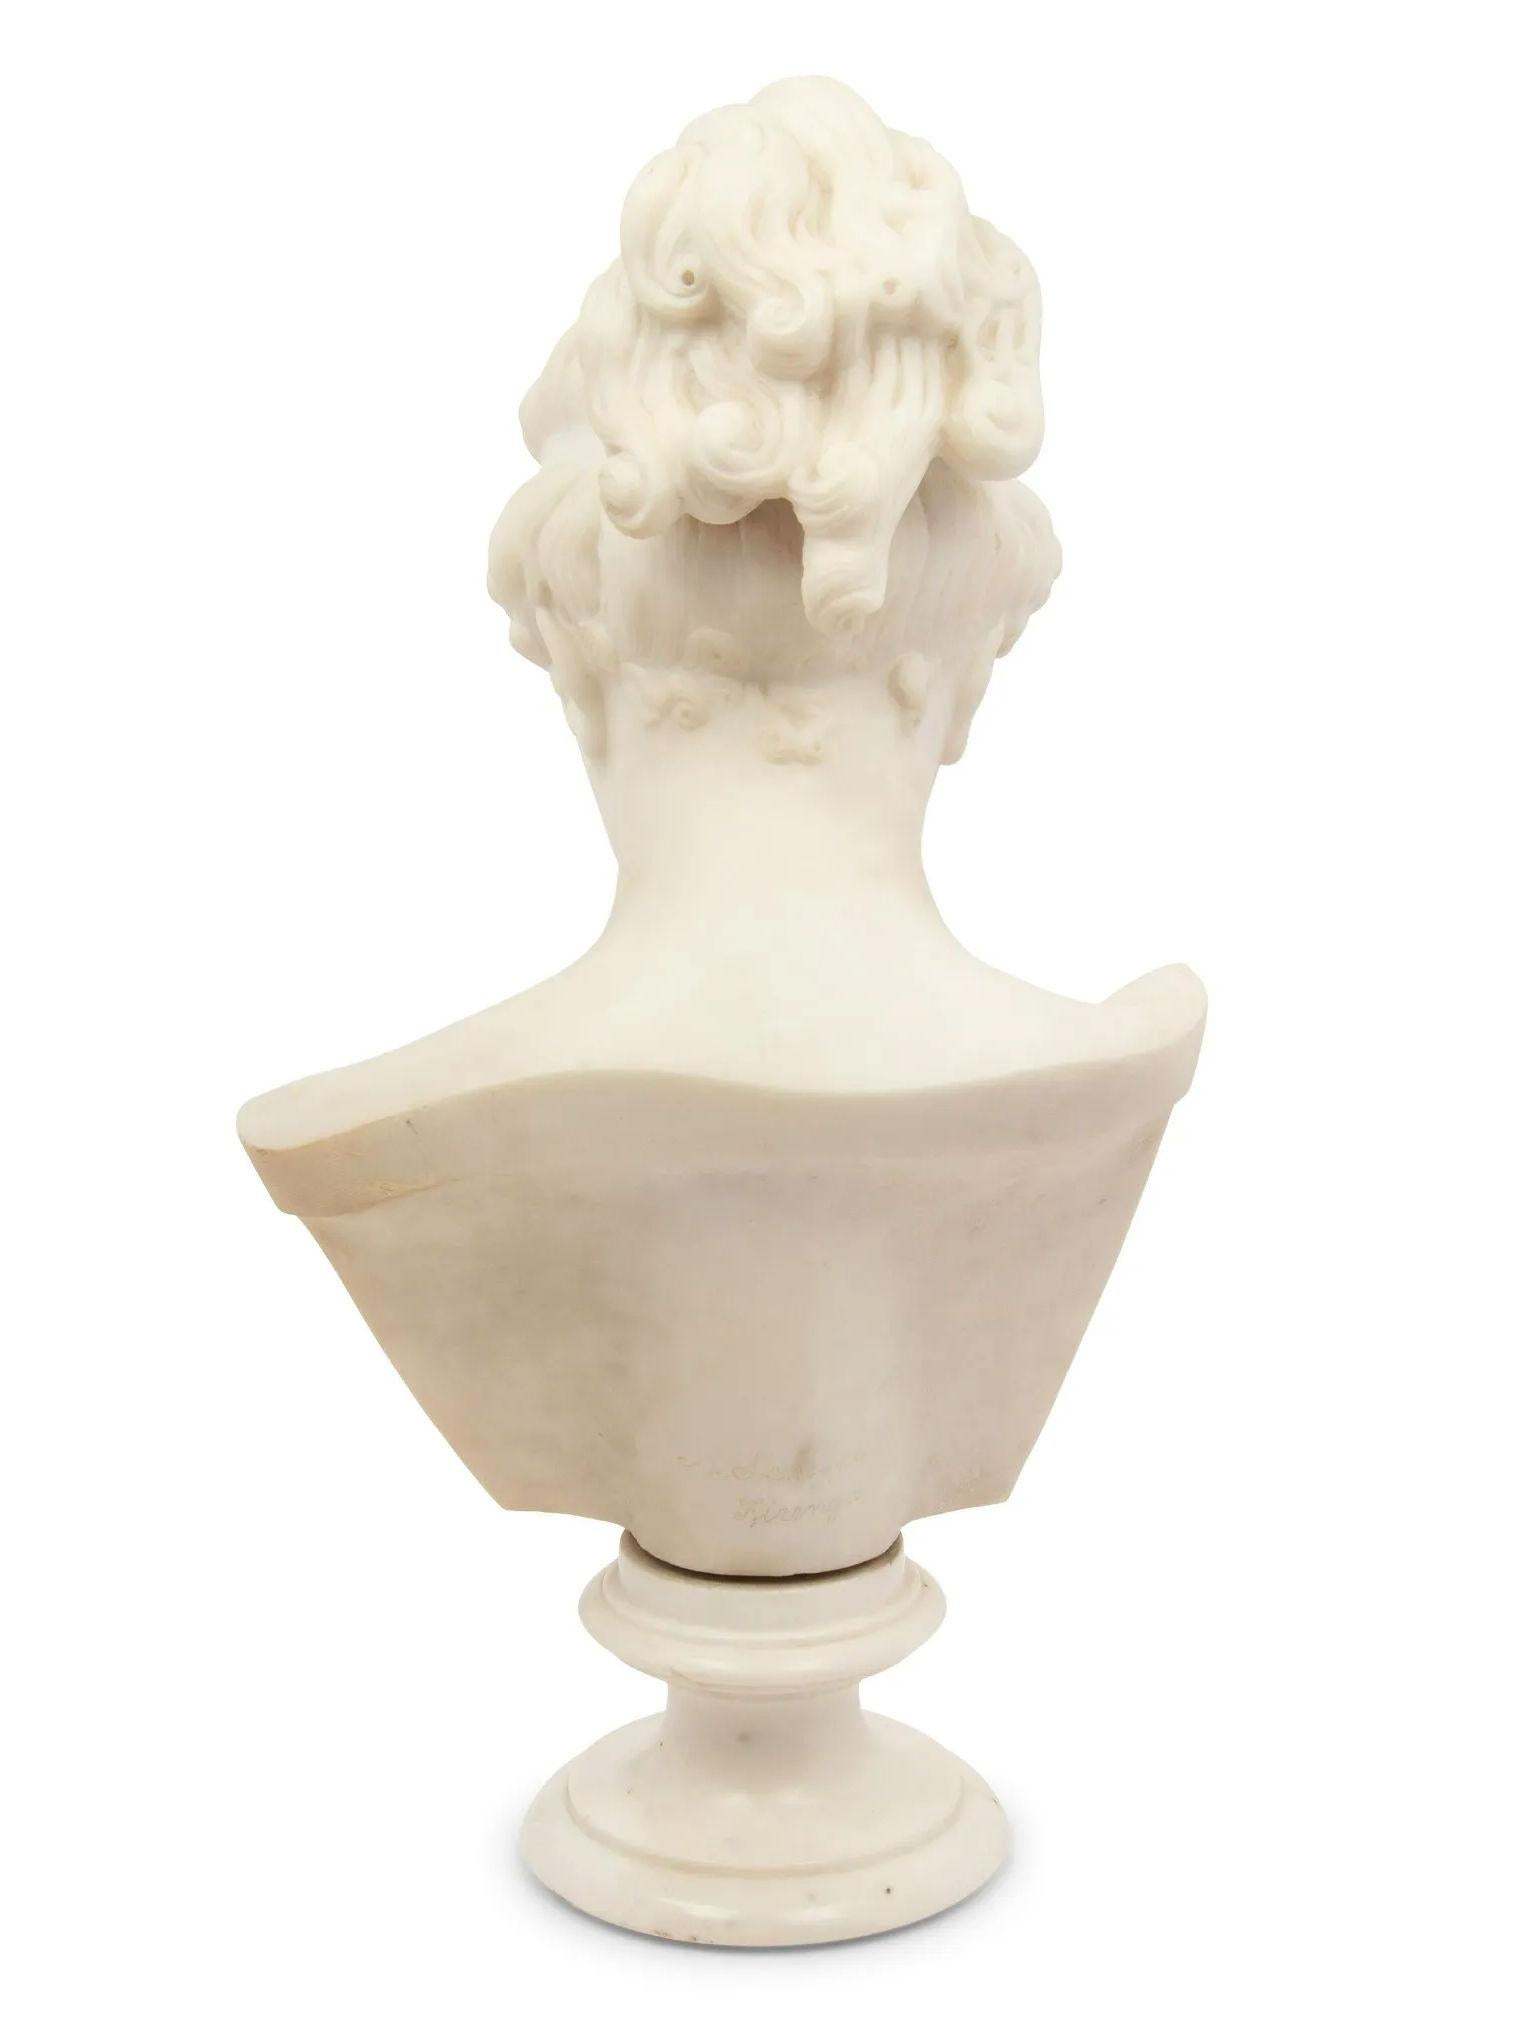 Italian After Antonio Canova a White Marble Bust of the Venus Italica